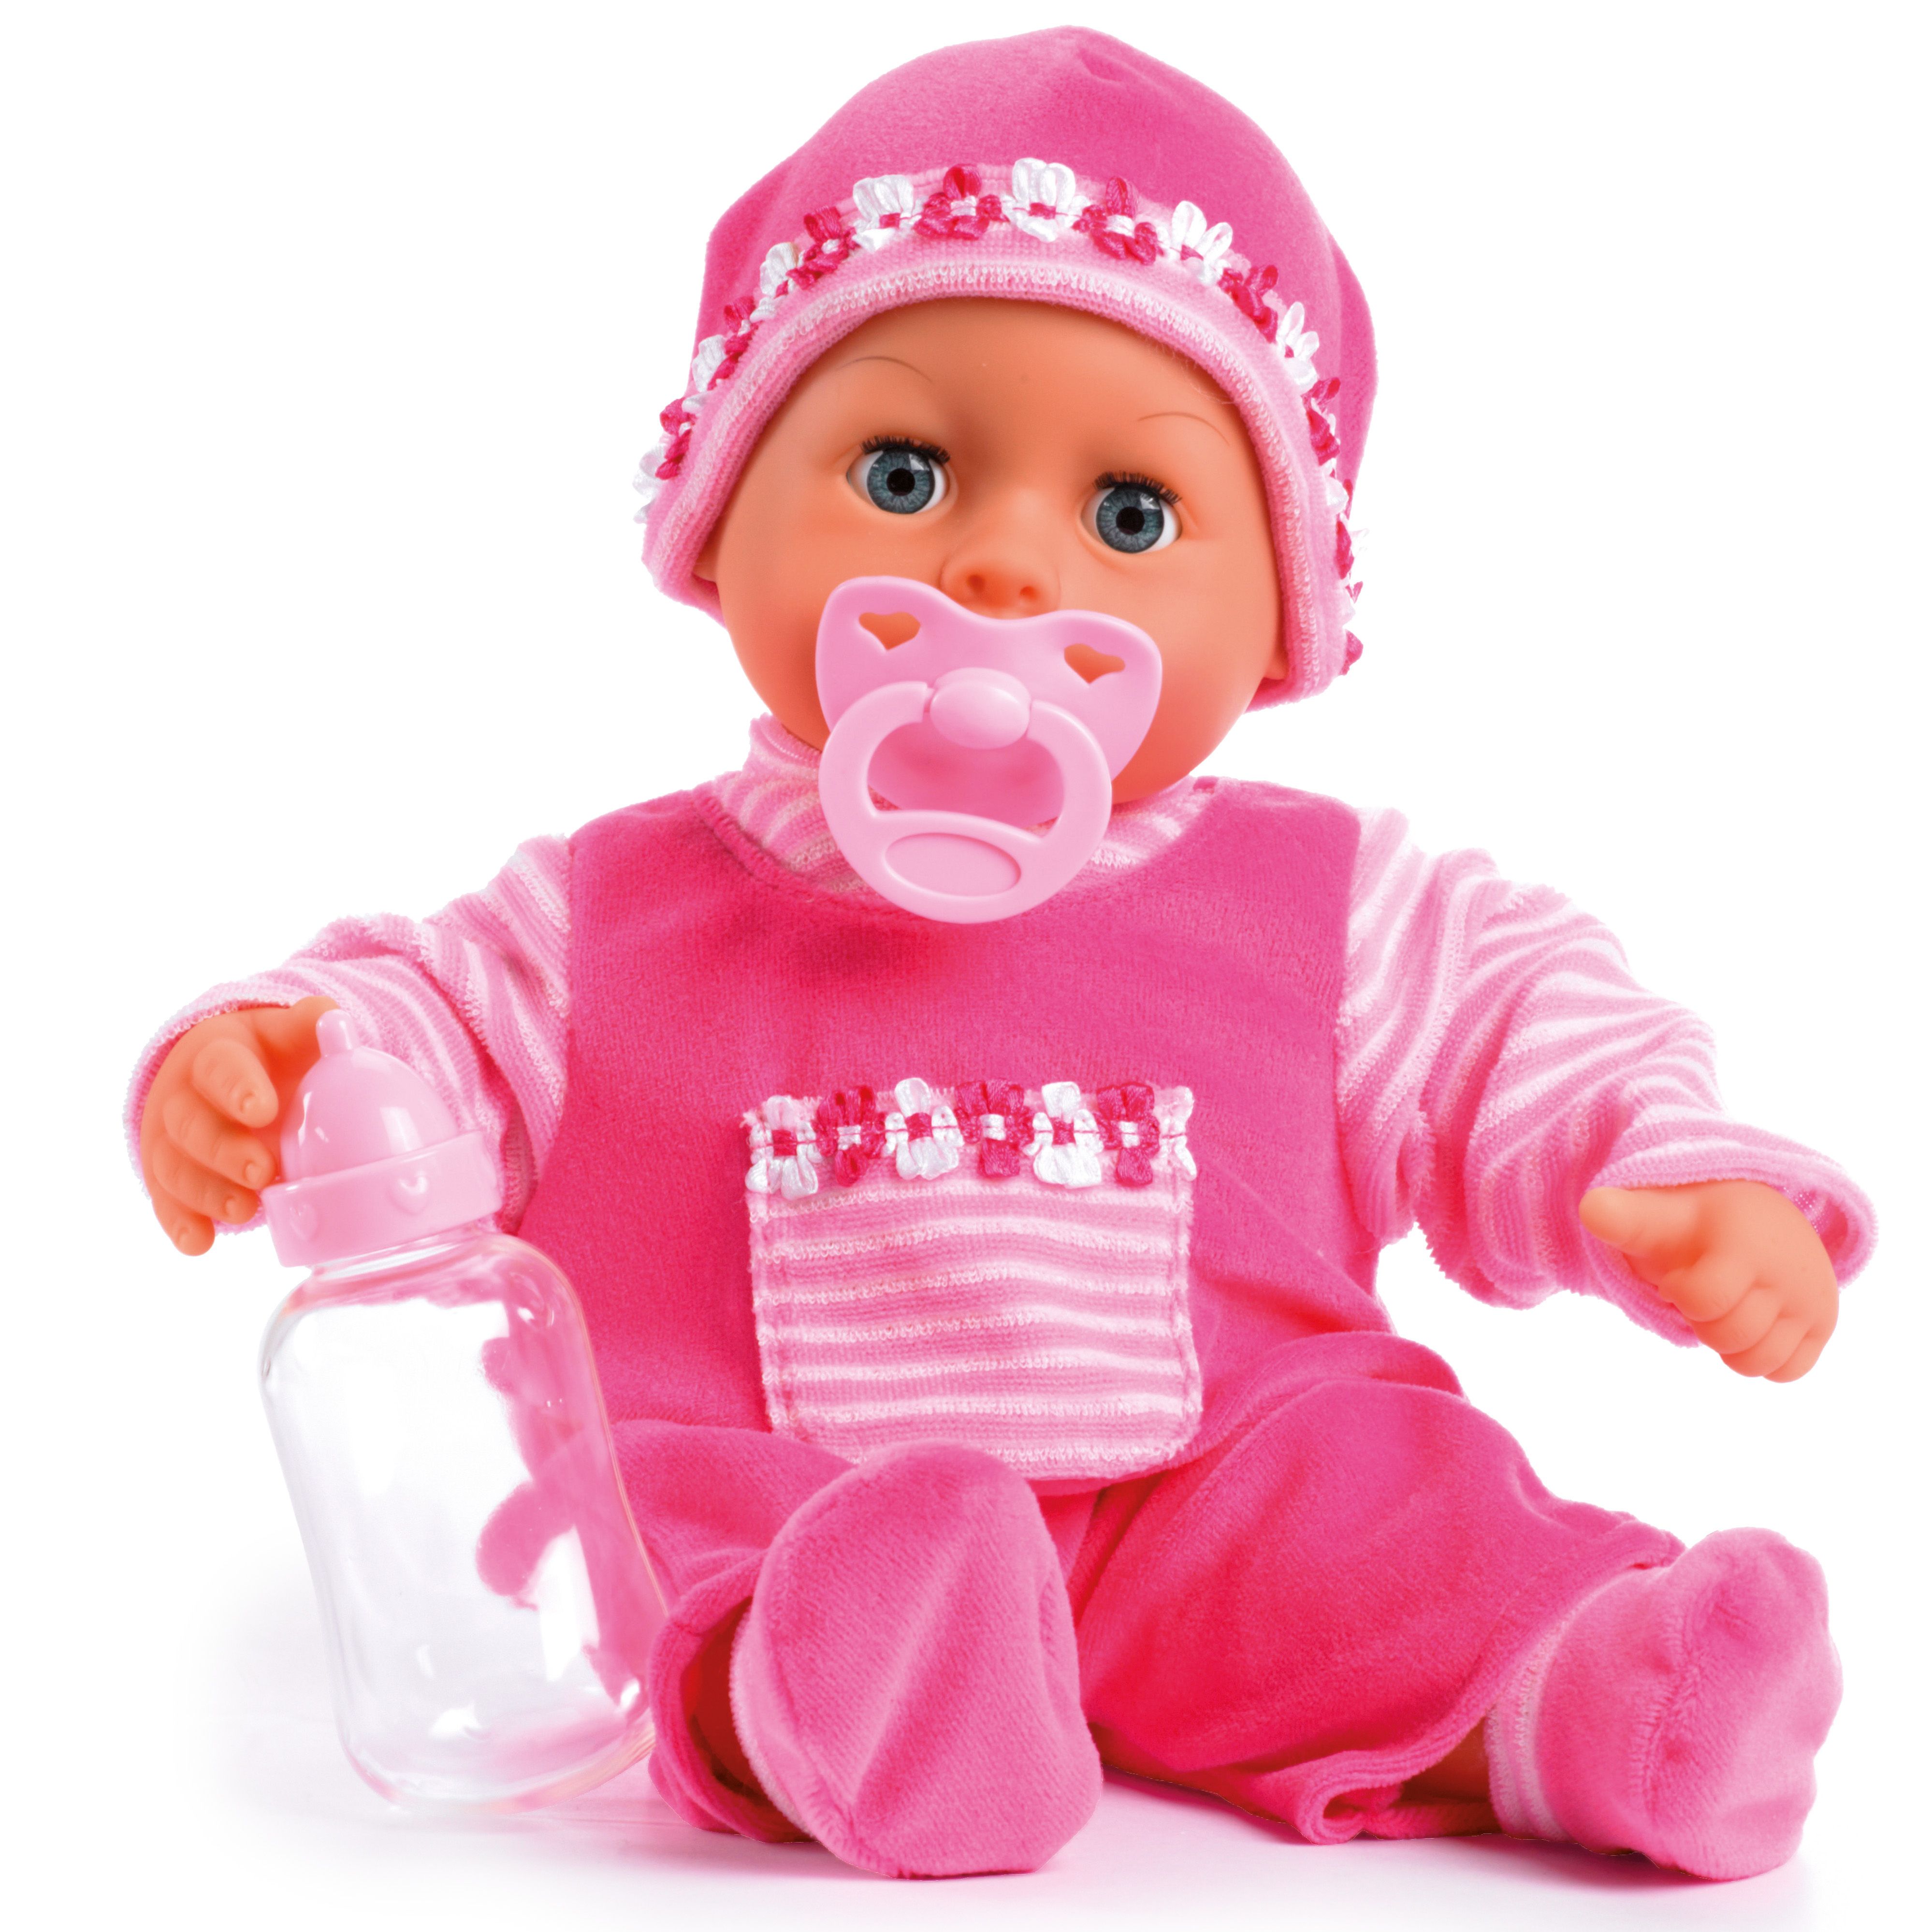 Ляльку для девочек. Кукла пупс Bayer. Кукла Bayer Design. Интерактивные куклы Bayer. Кукла Bayer Design d-96247.